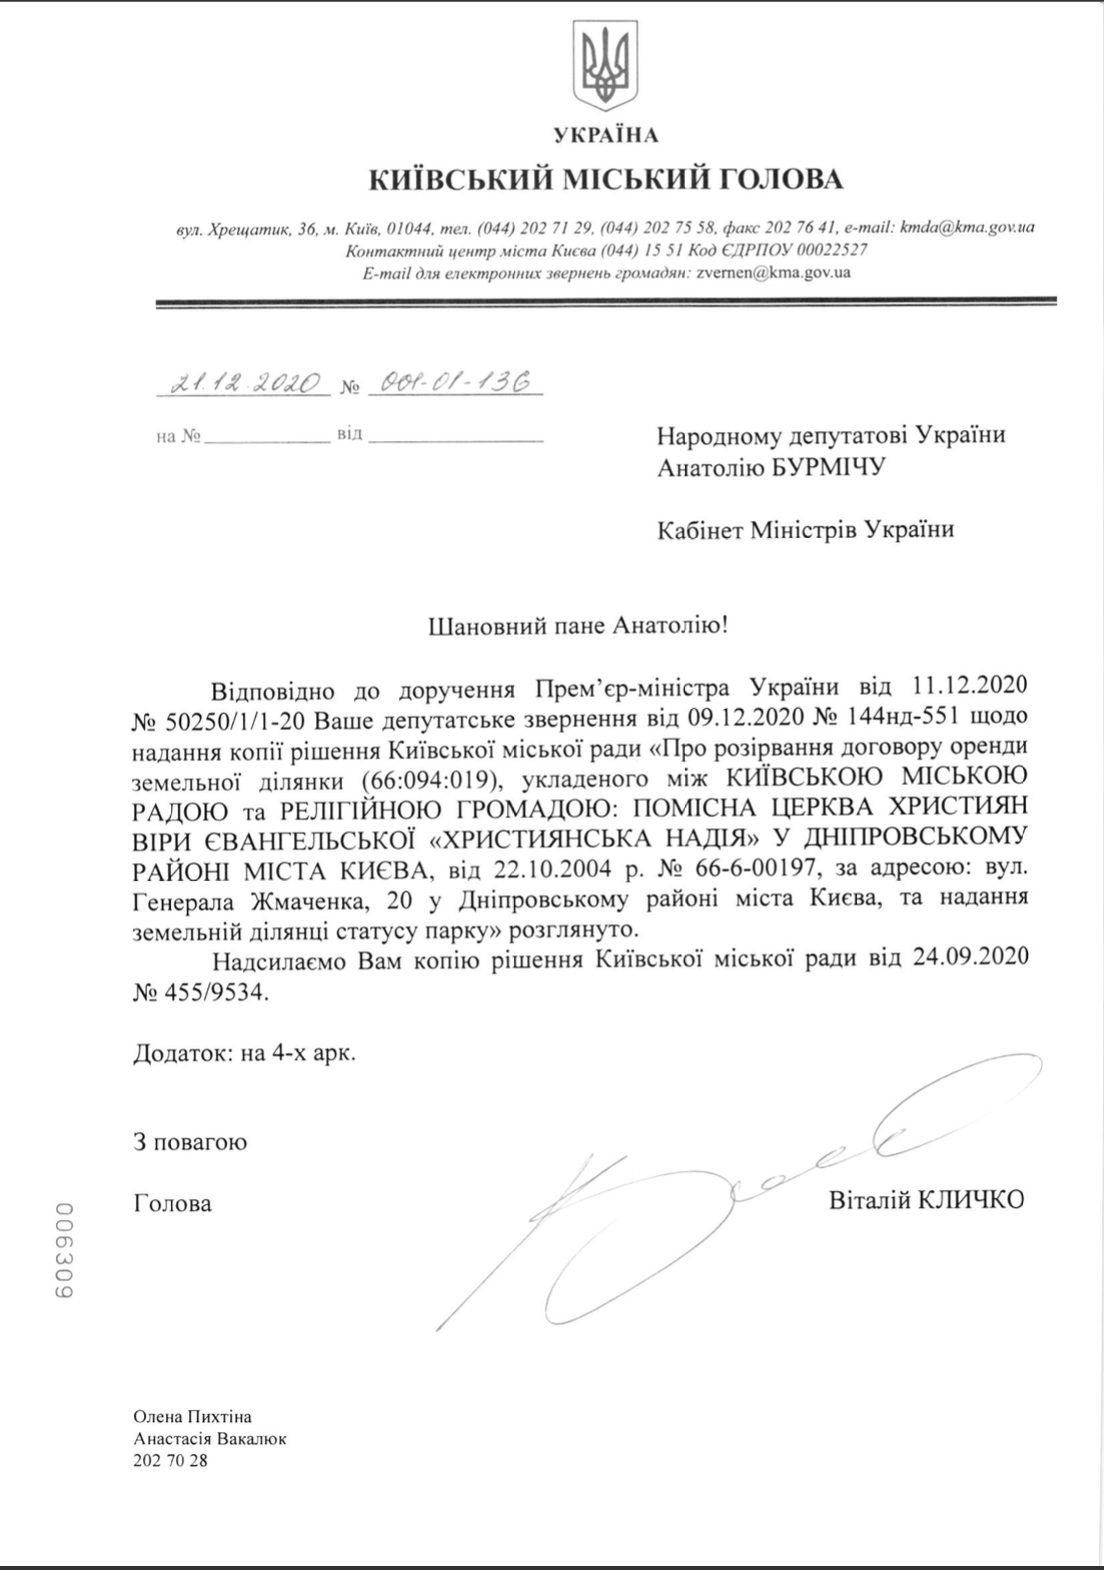 Киевляне отстояли парк на Жмаченко, 20 – решение городского совета